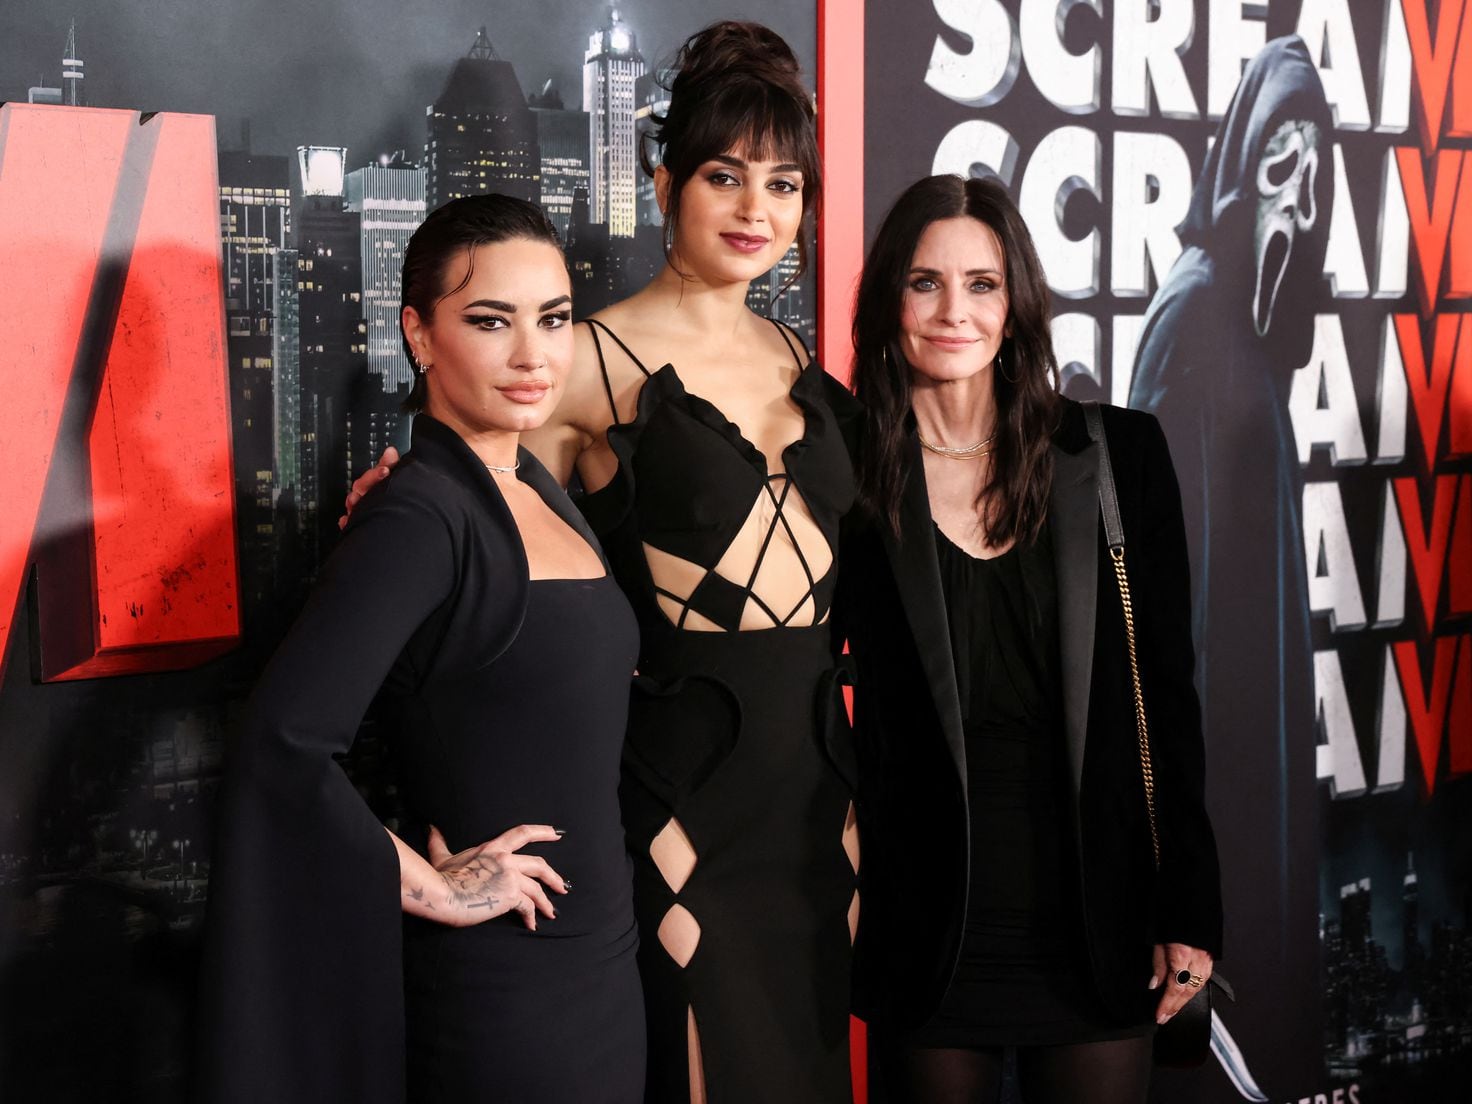 Scream 6 release date, cast, story & more